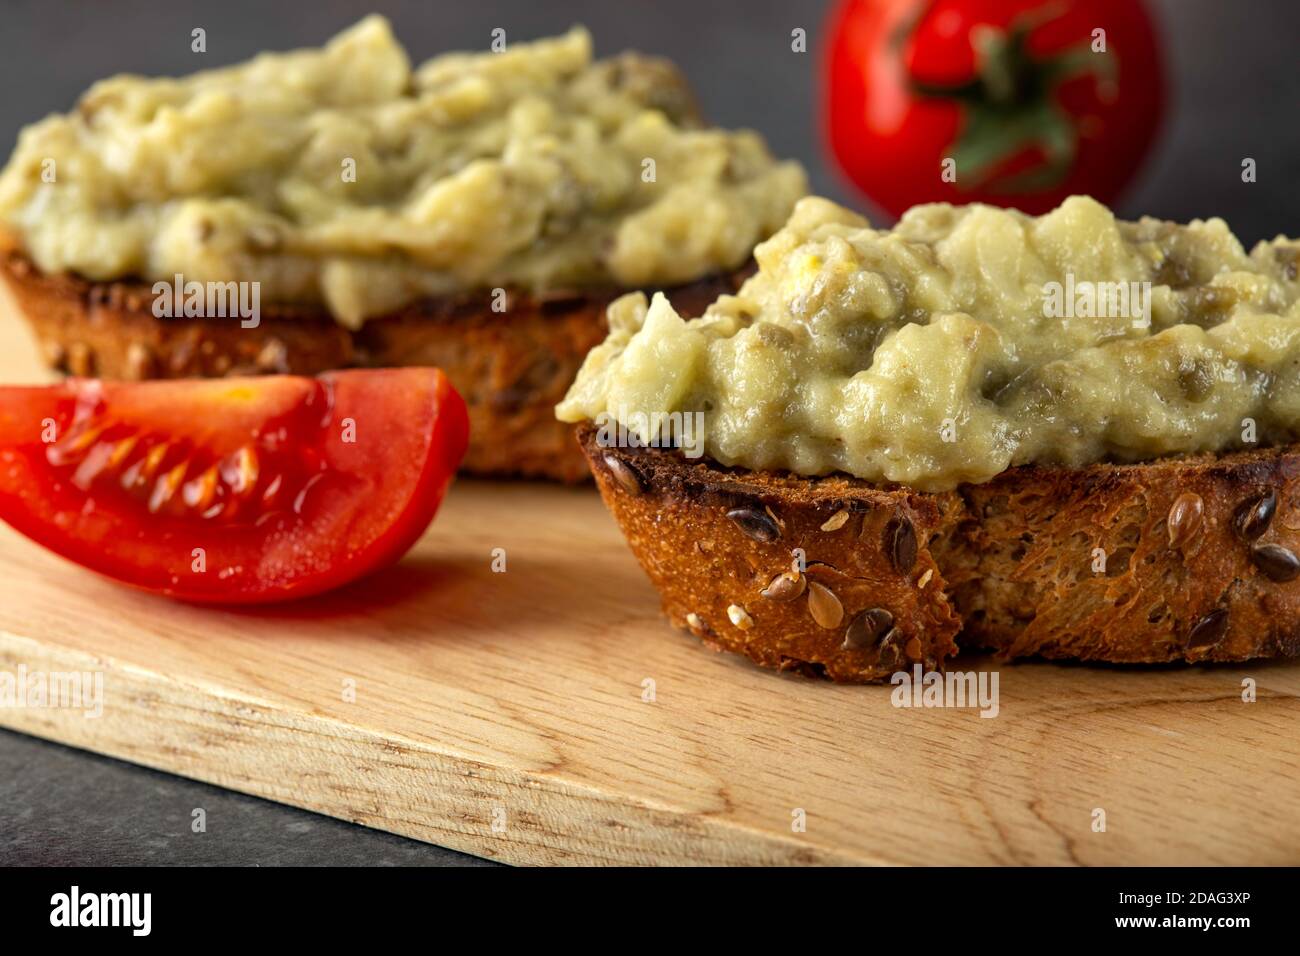 Eggplant salad with onion and mayonnaise on toast Stock Photo